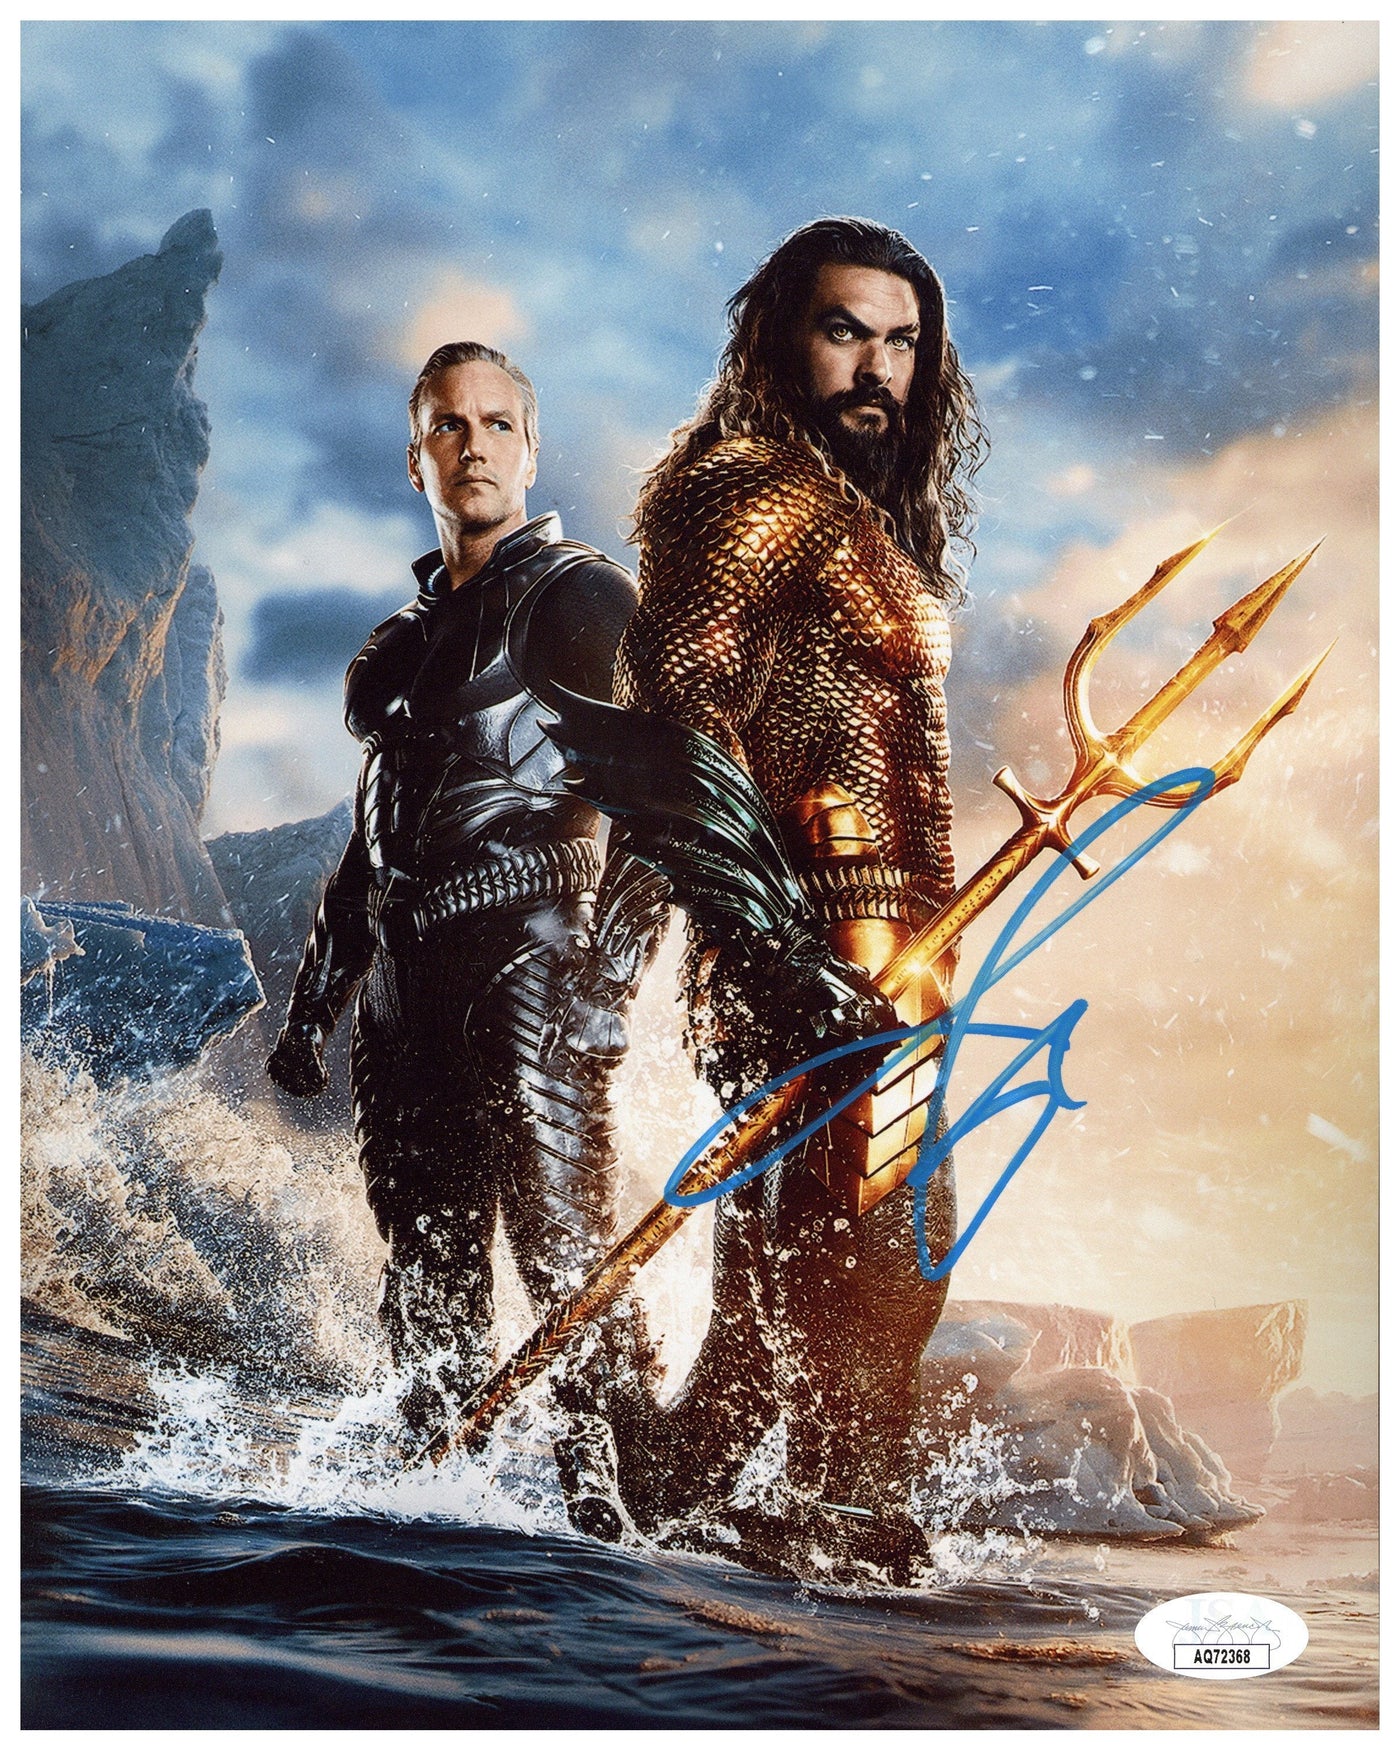 Jason Momoa Signed 8x10 Photo DC Aquaman Autographed JSA COA